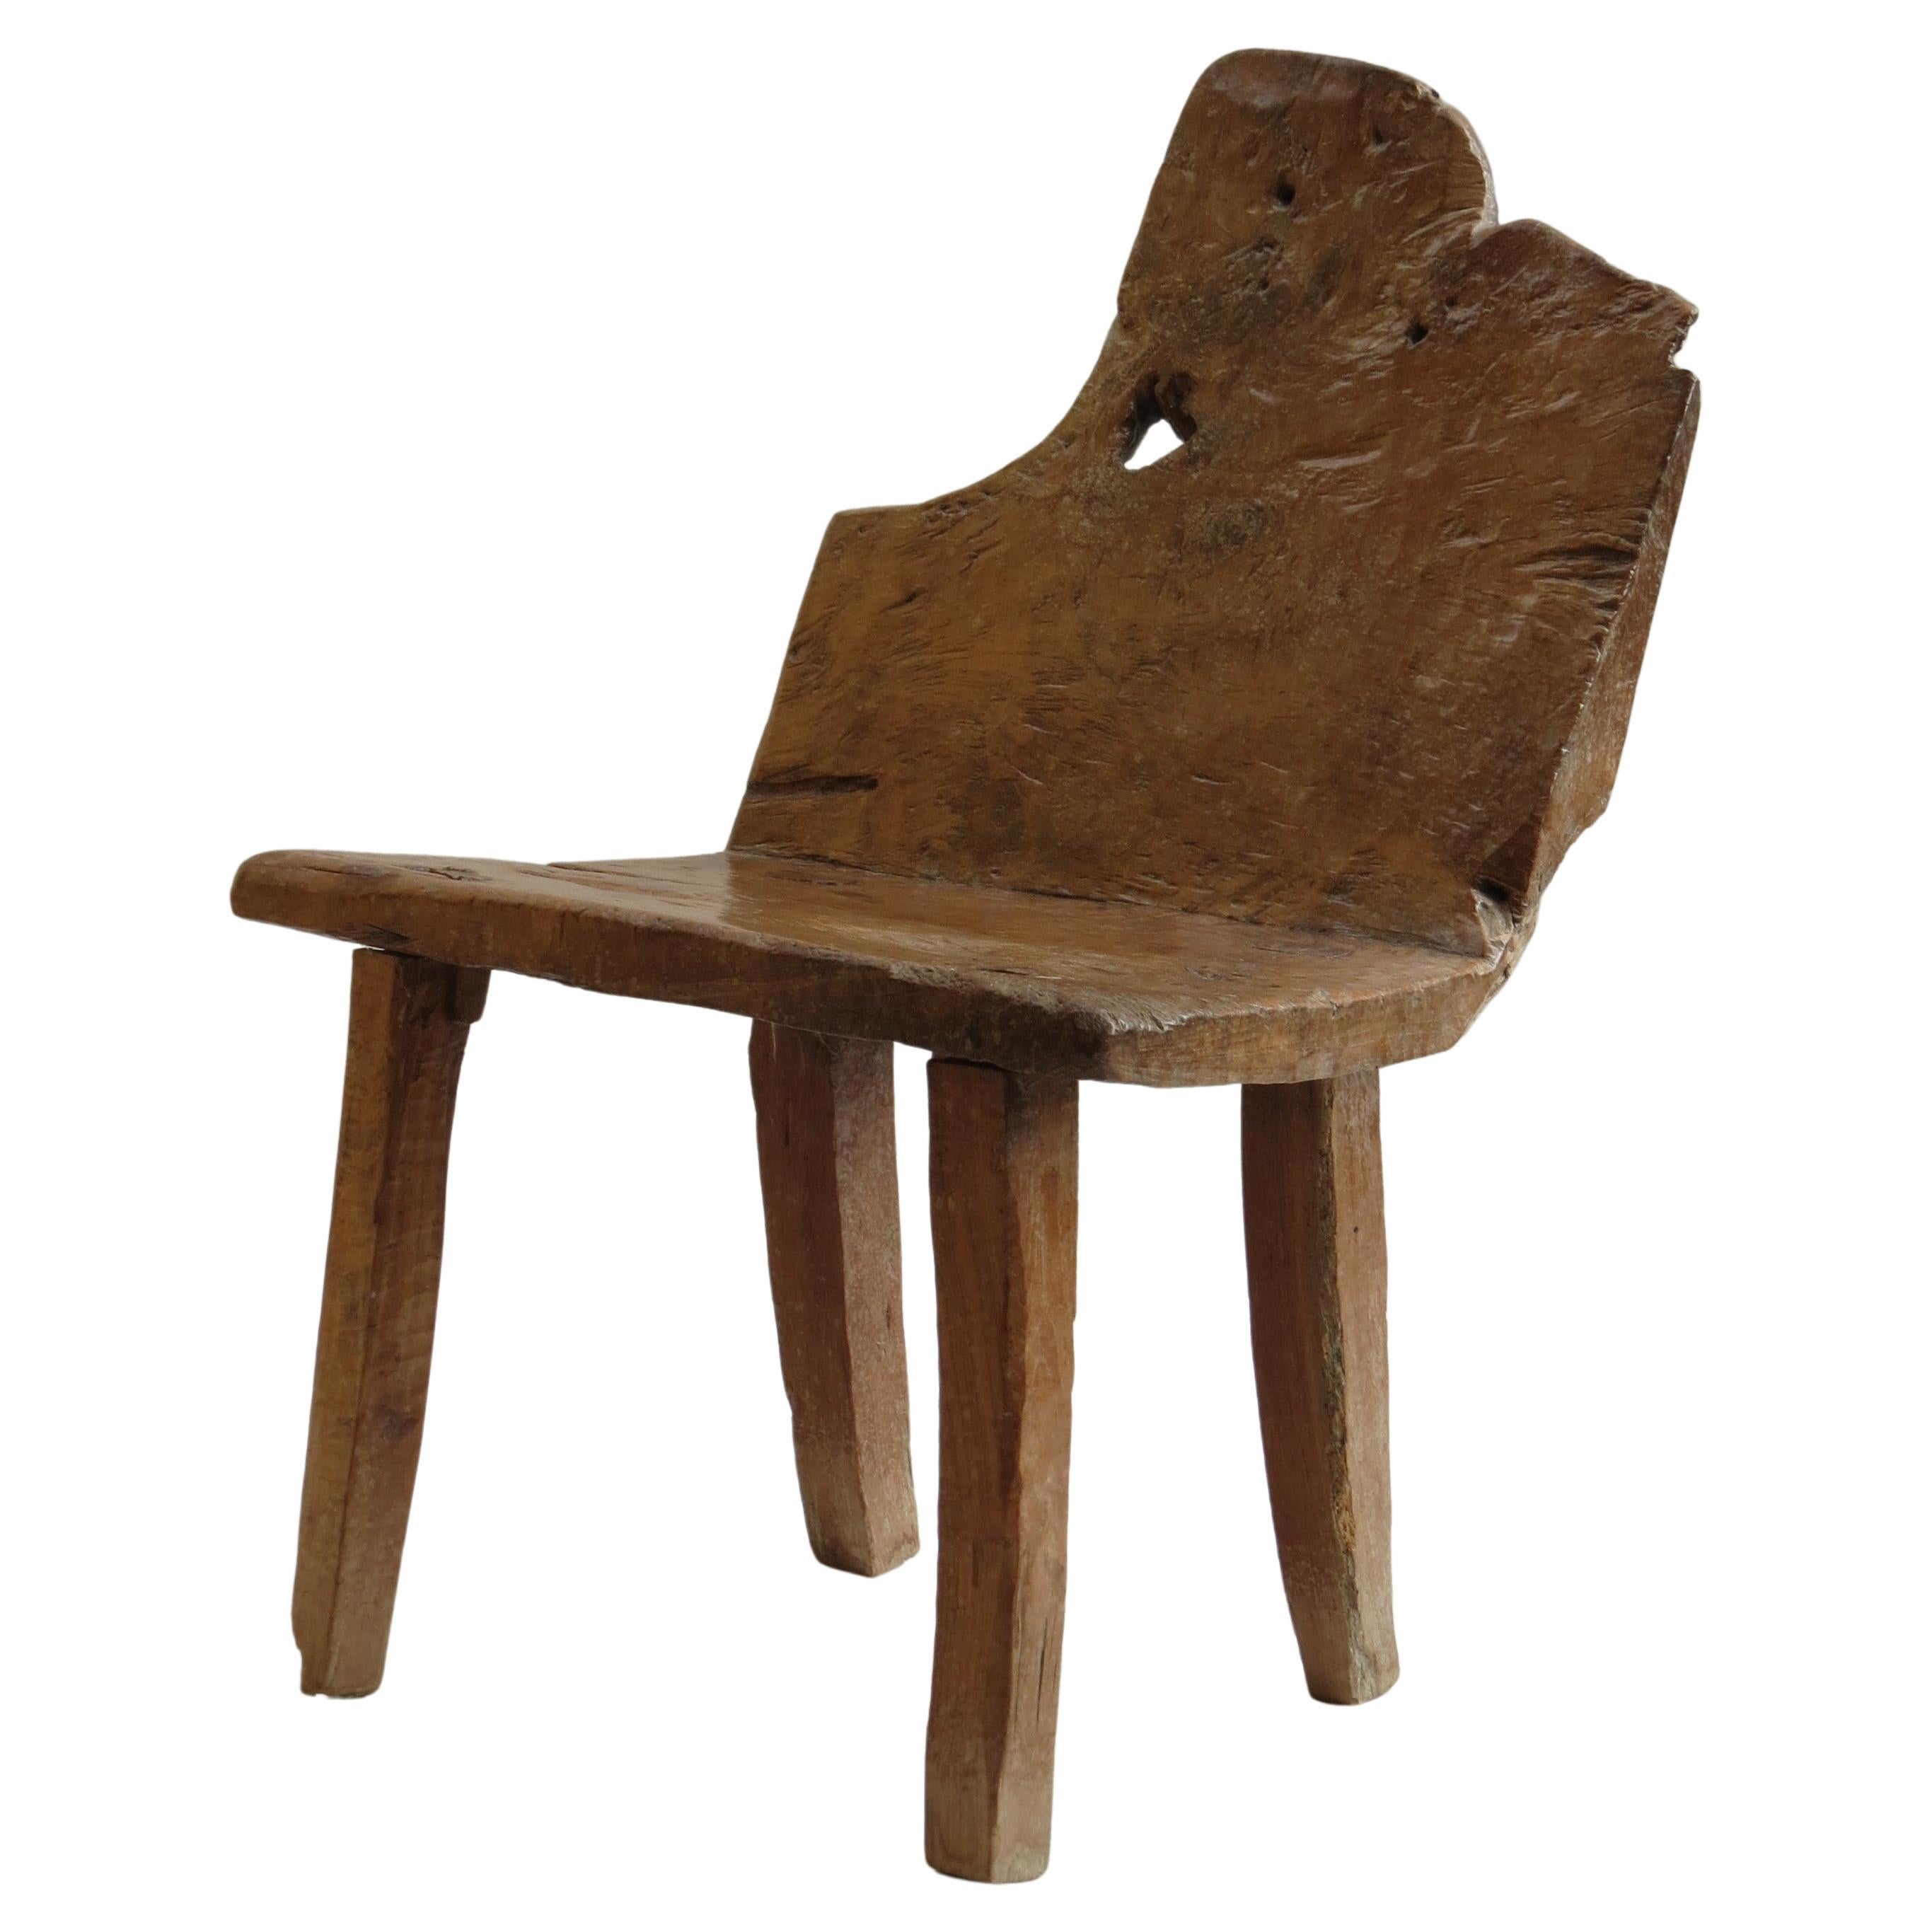 Antique Rare Primitive Walnut Chair 19th Century English Wabi Sabi style